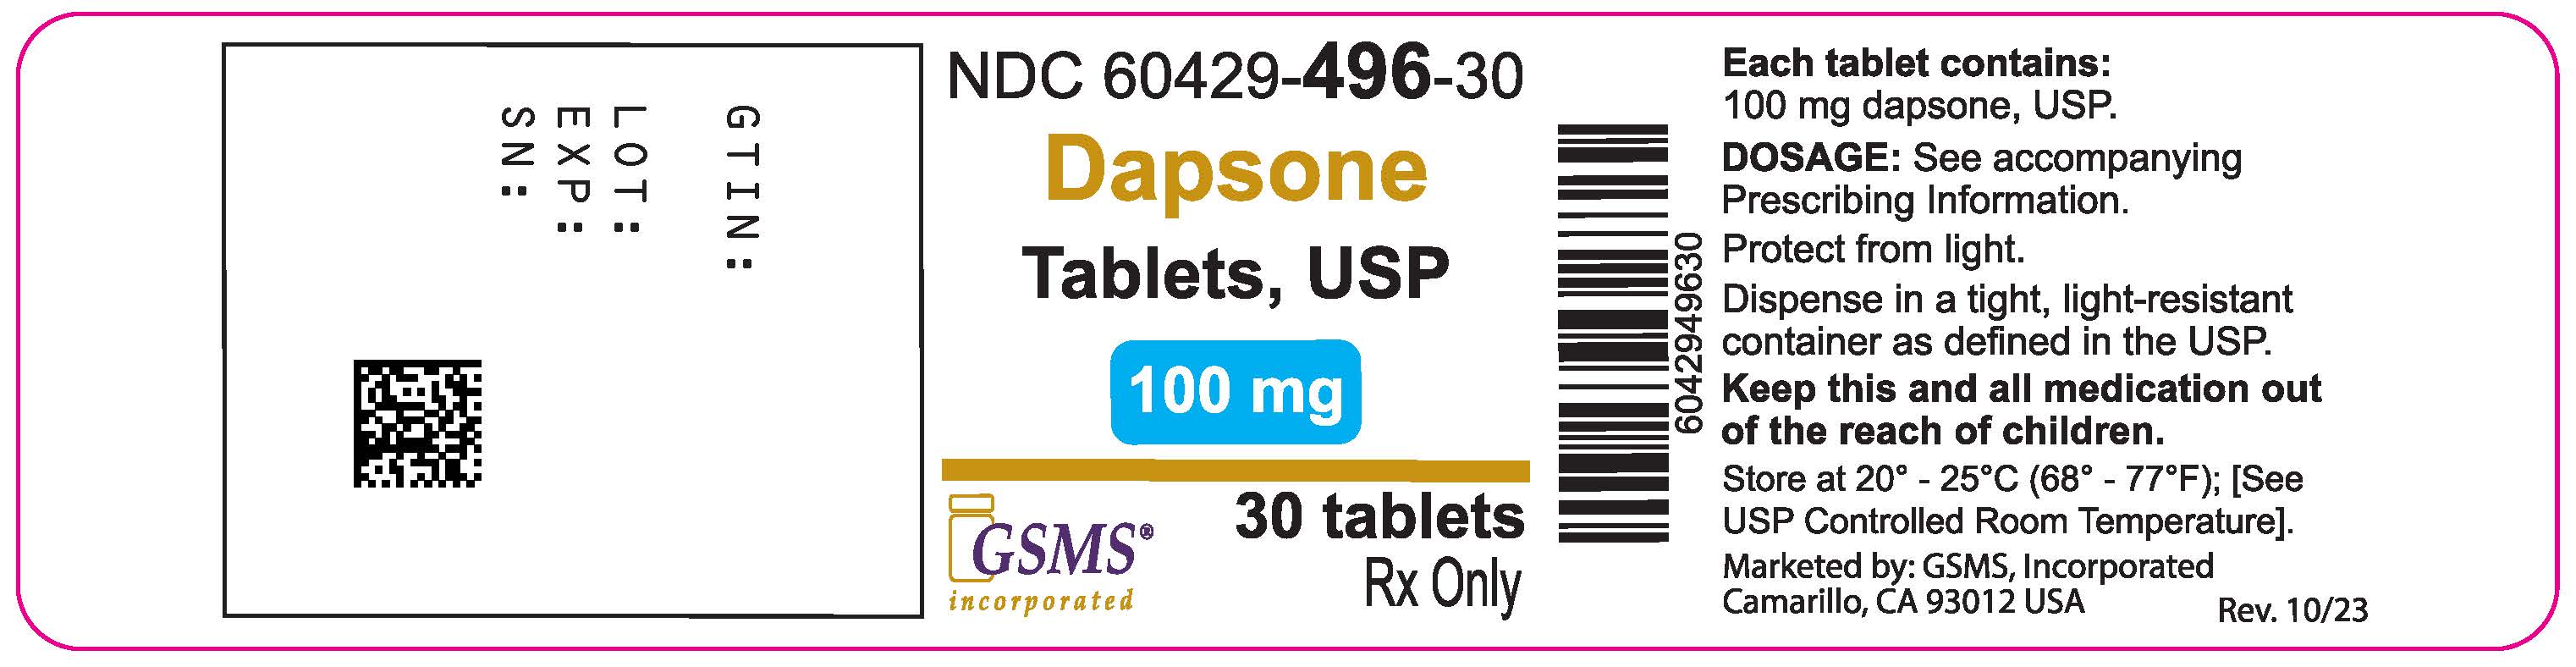 60429-496-30OL - Dapsone Tablets - Rev. 1023.jpg